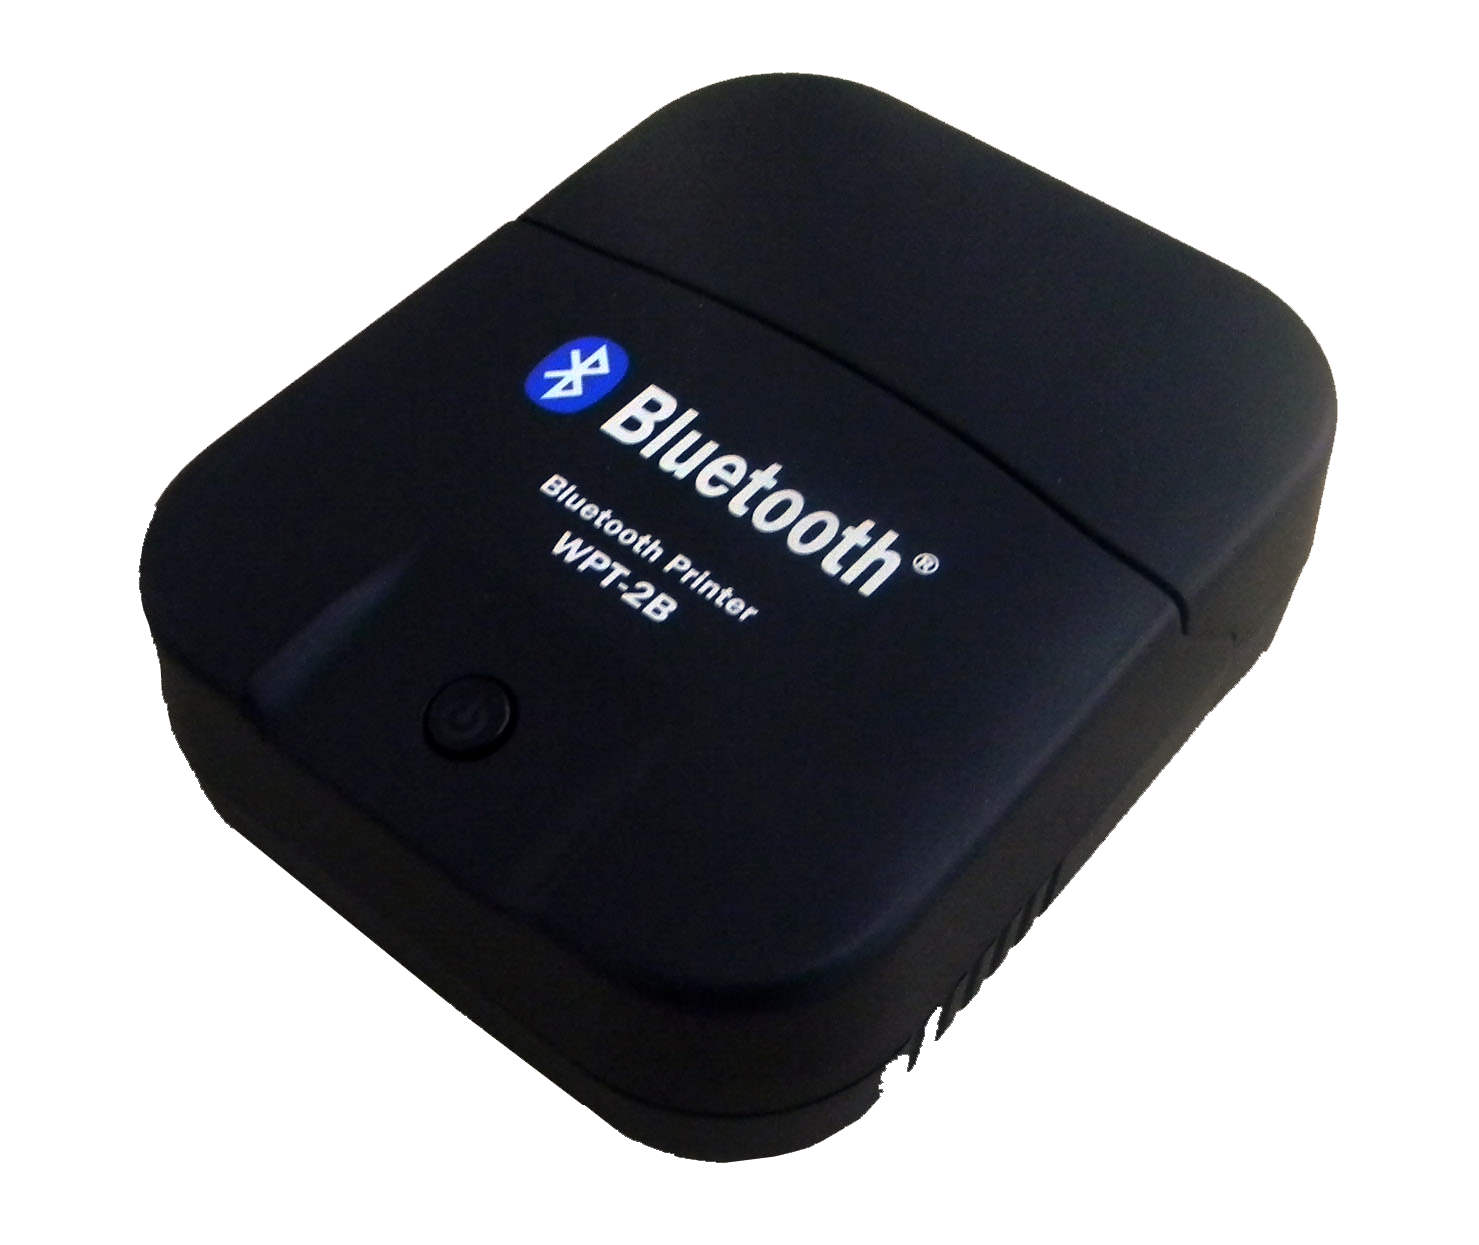 Bluetooth Thermal printer WPT-2B